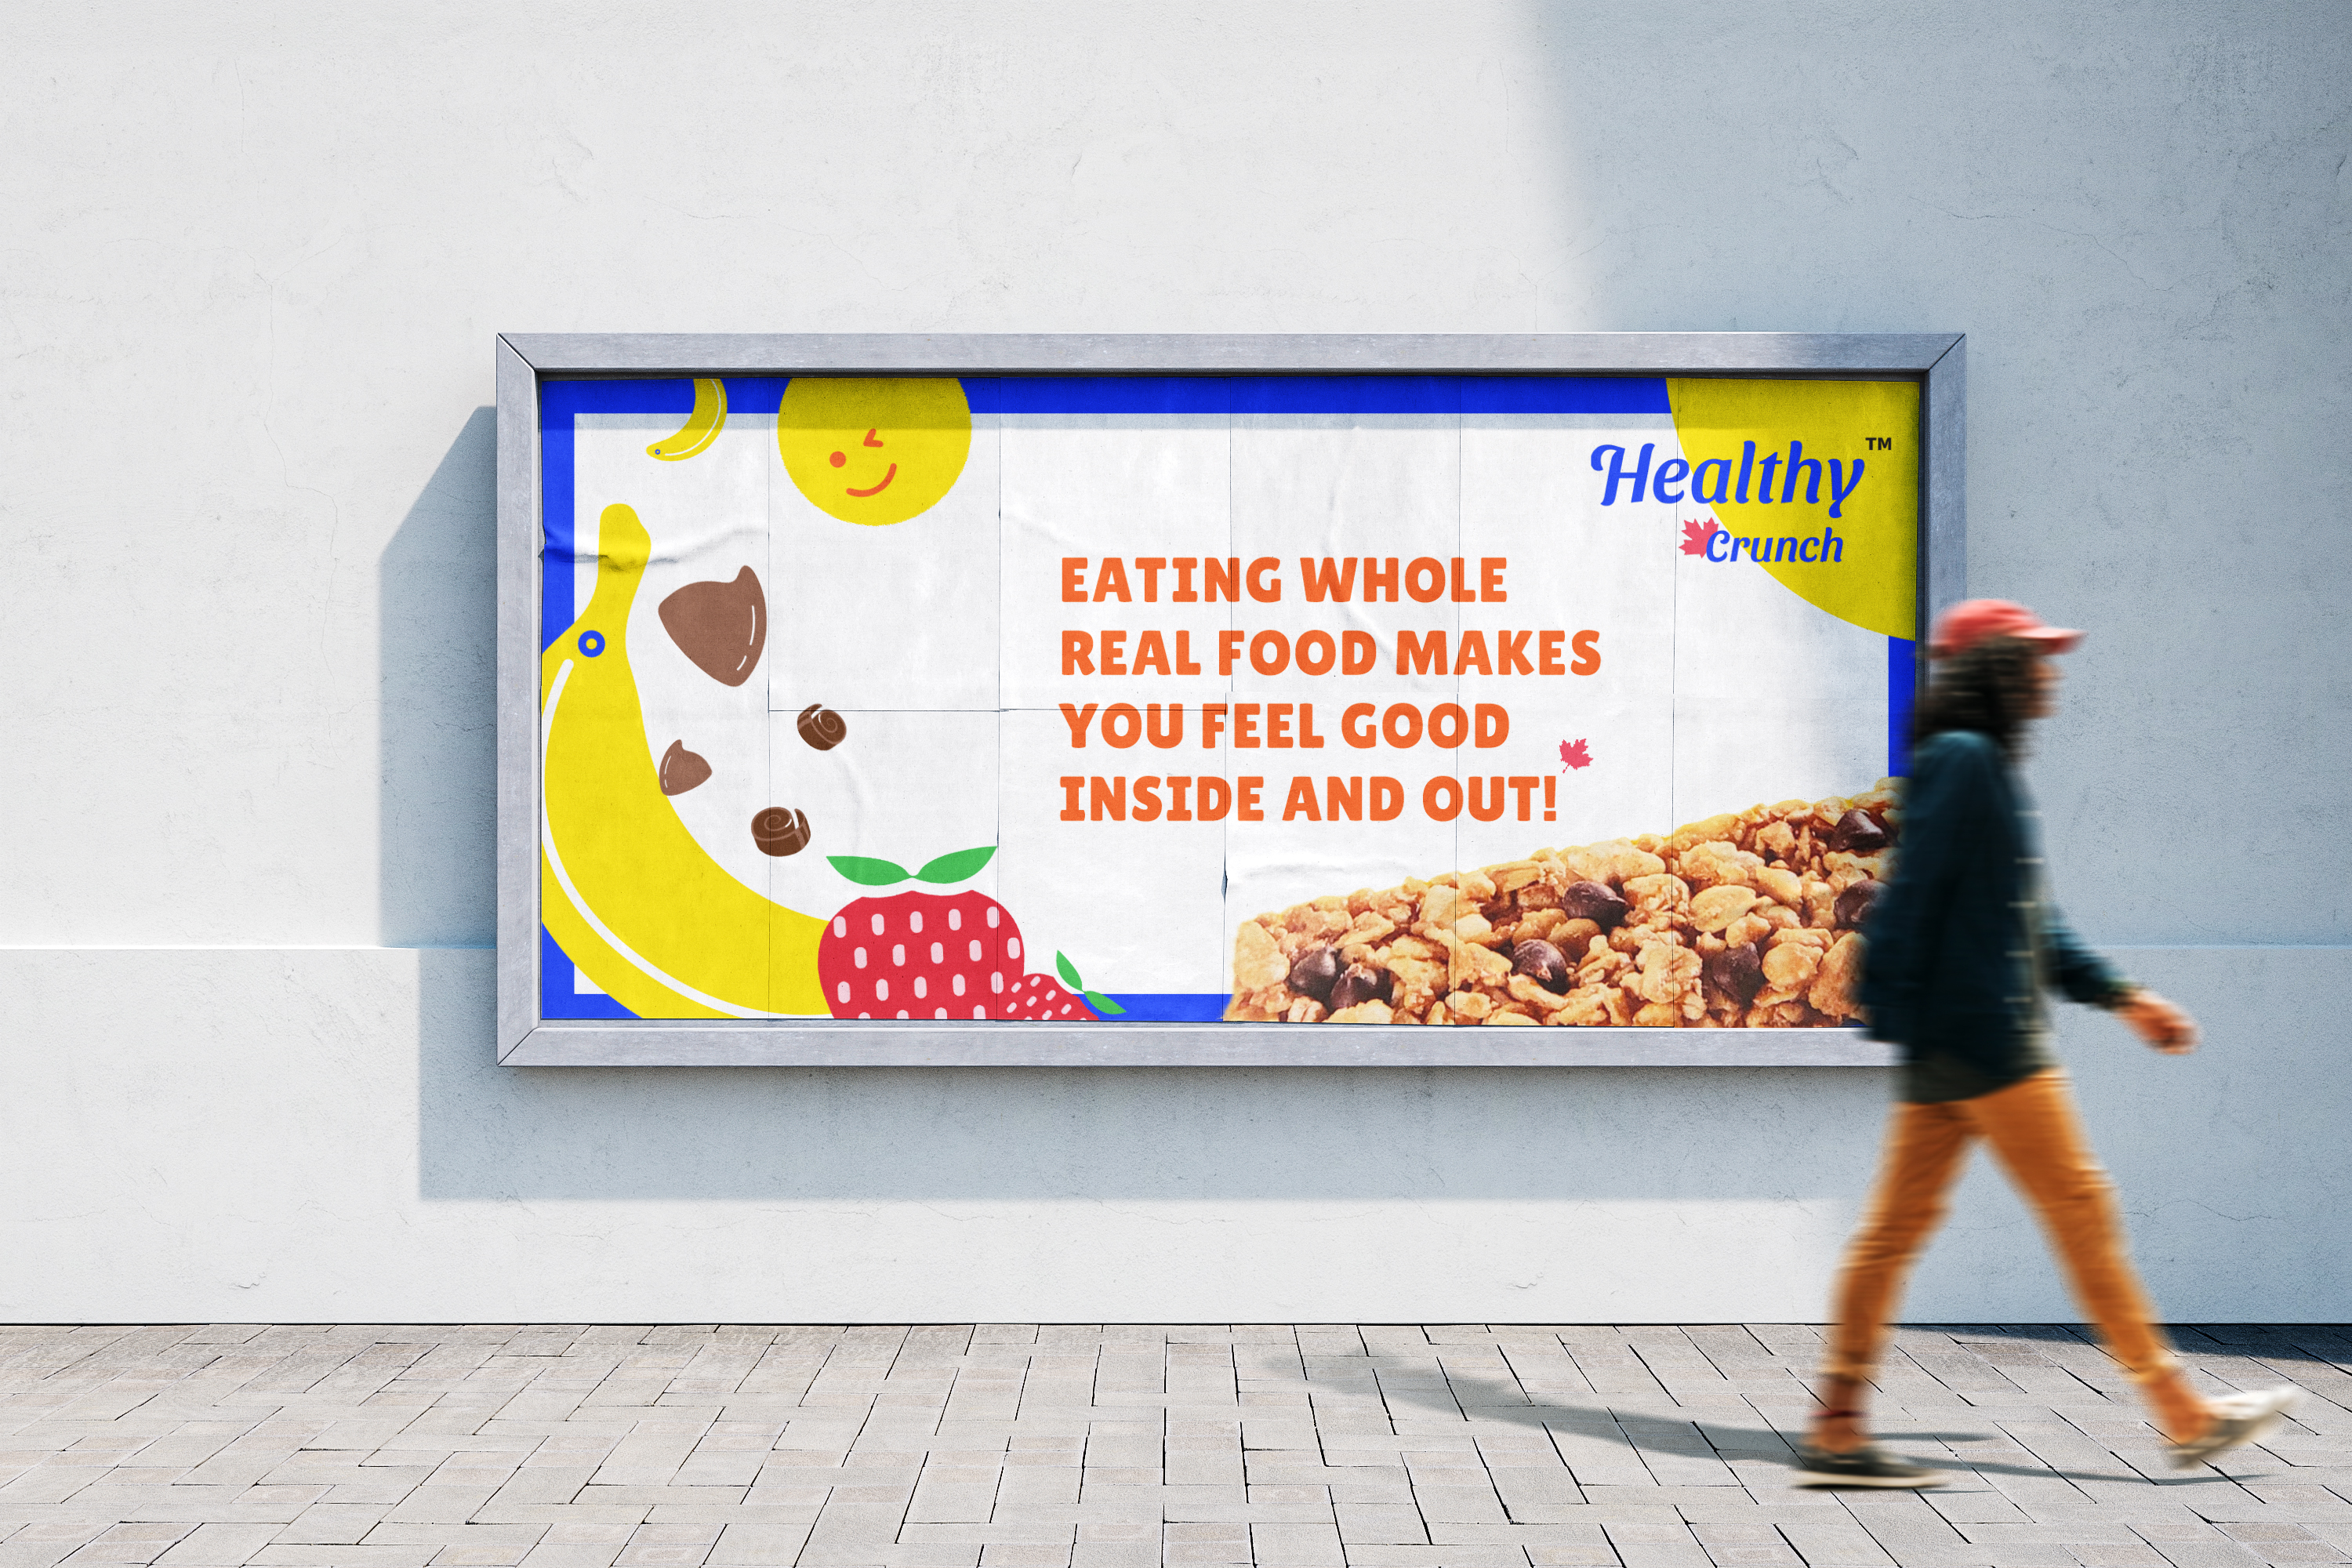 Healthy Crunch Rebranding